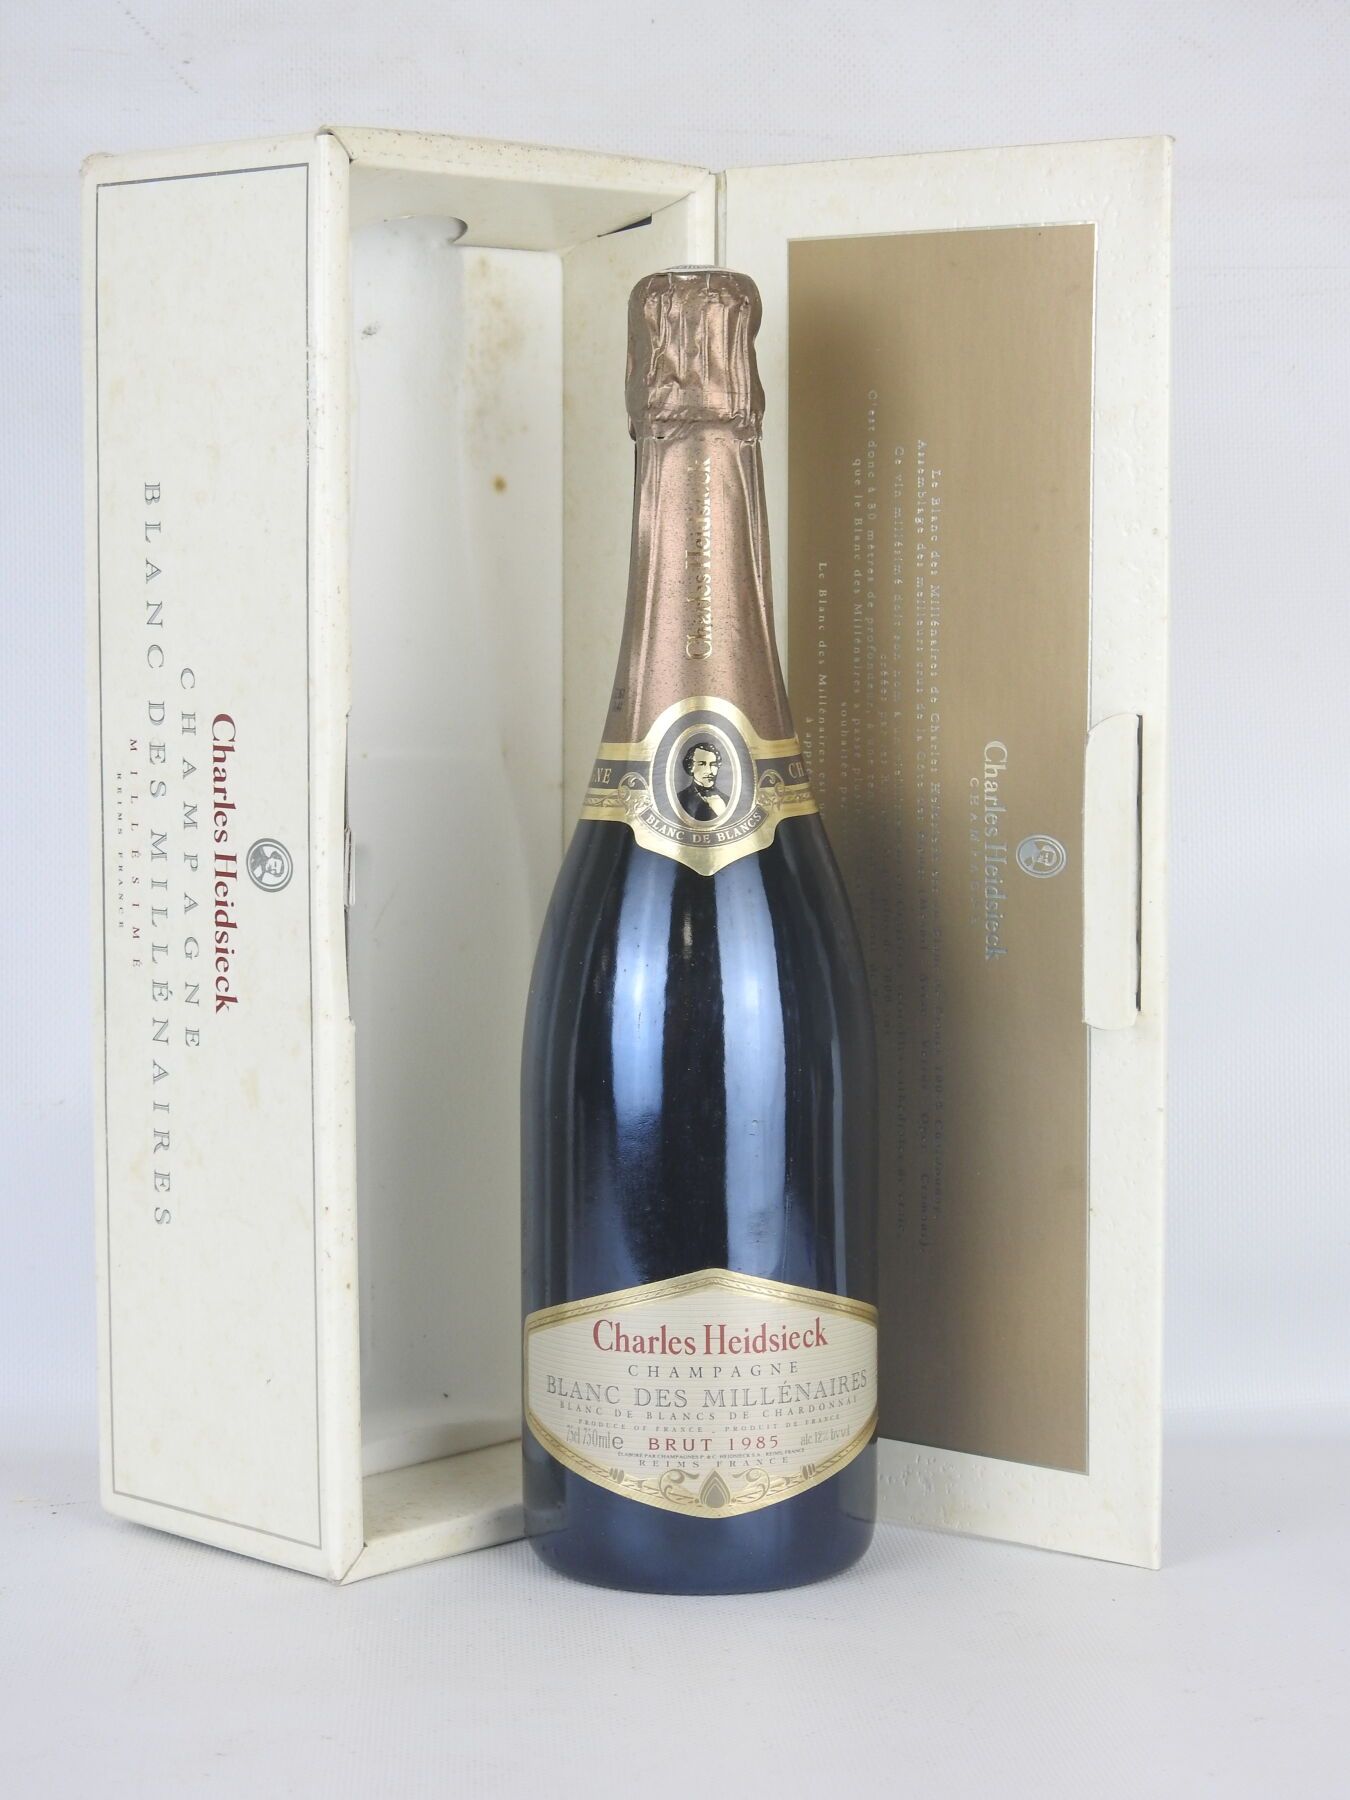 Null 1 bottiglia di Champagne Charles Heidsieck cuvee du millenaire 1985. In una&hellip;